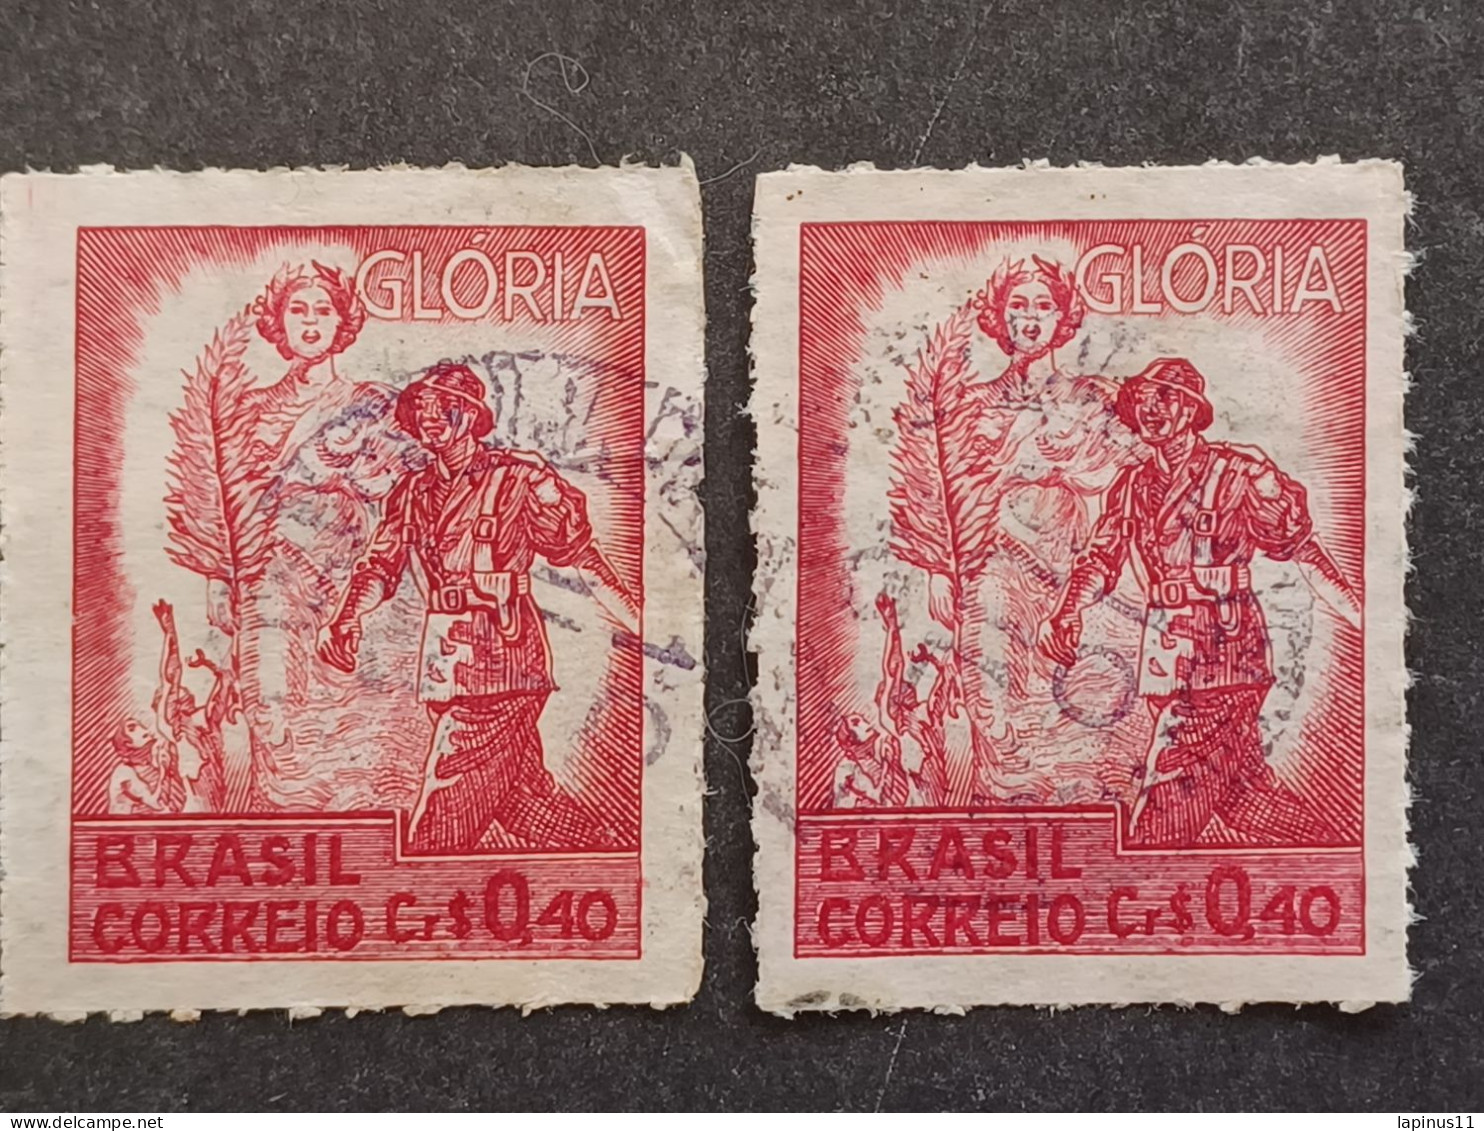 BRASILE 1945 GLORY SCOTT N 629 WMK 268 ERROR INVERTED - Used Stamps